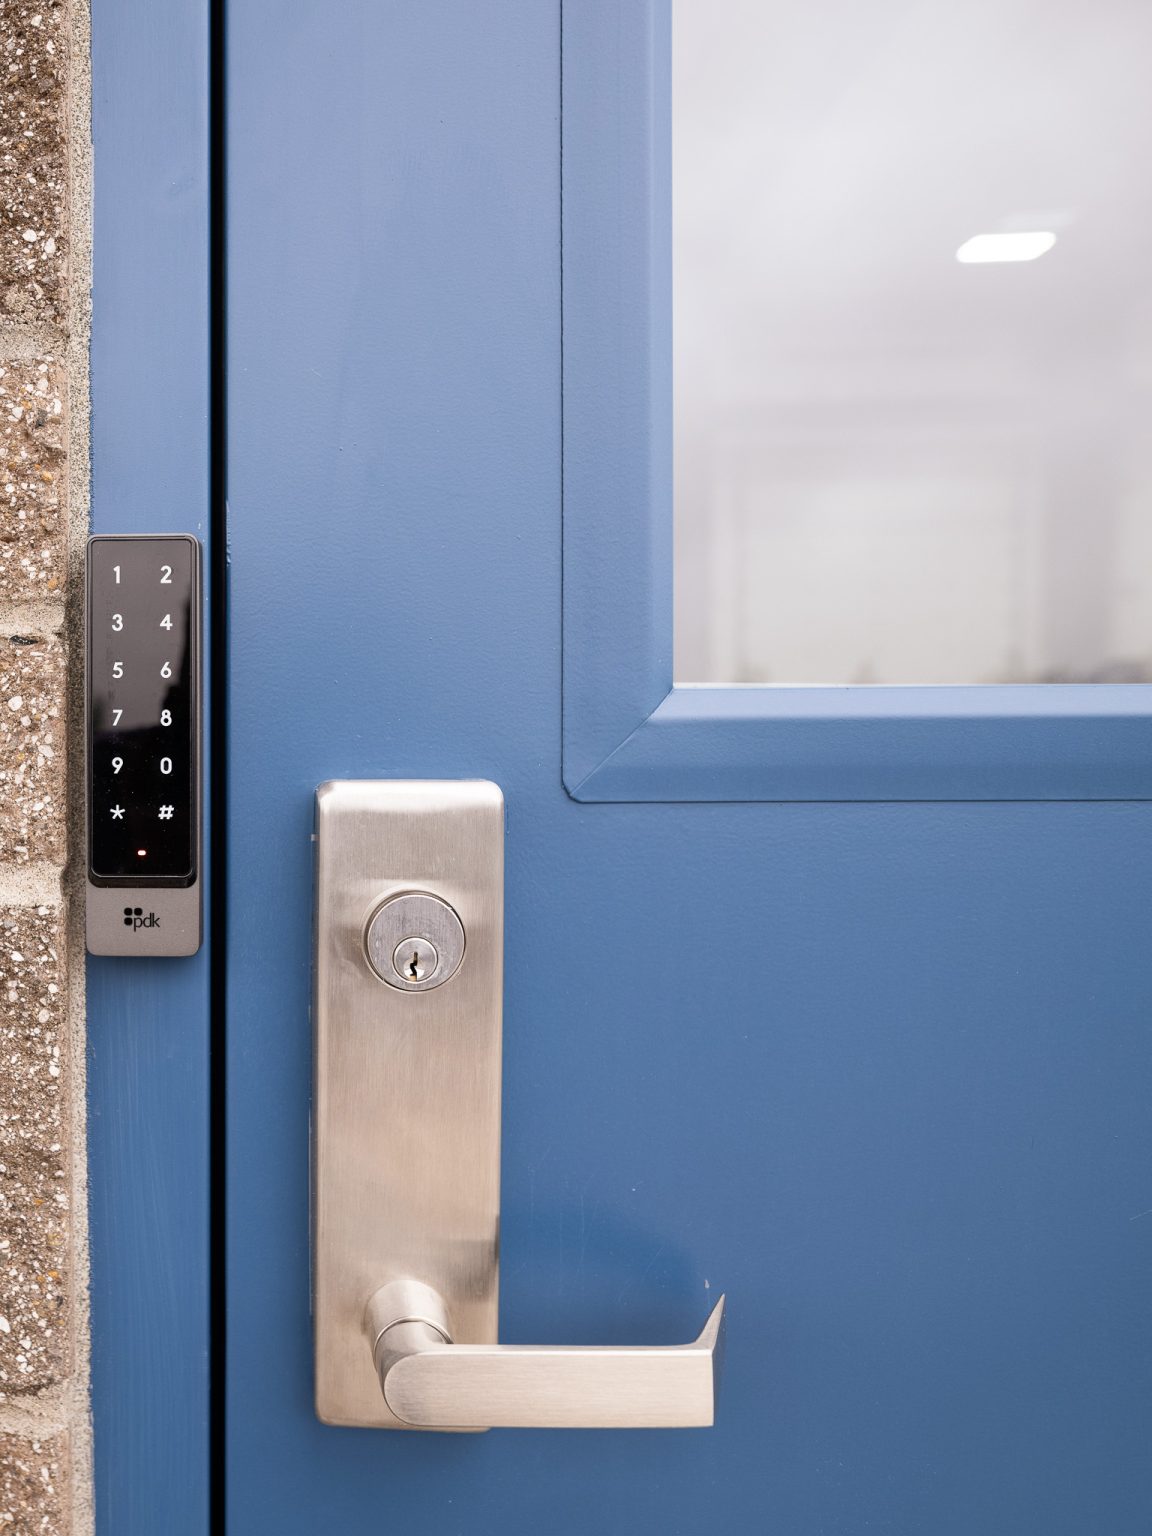 Industrial Commercial Door With Keypad